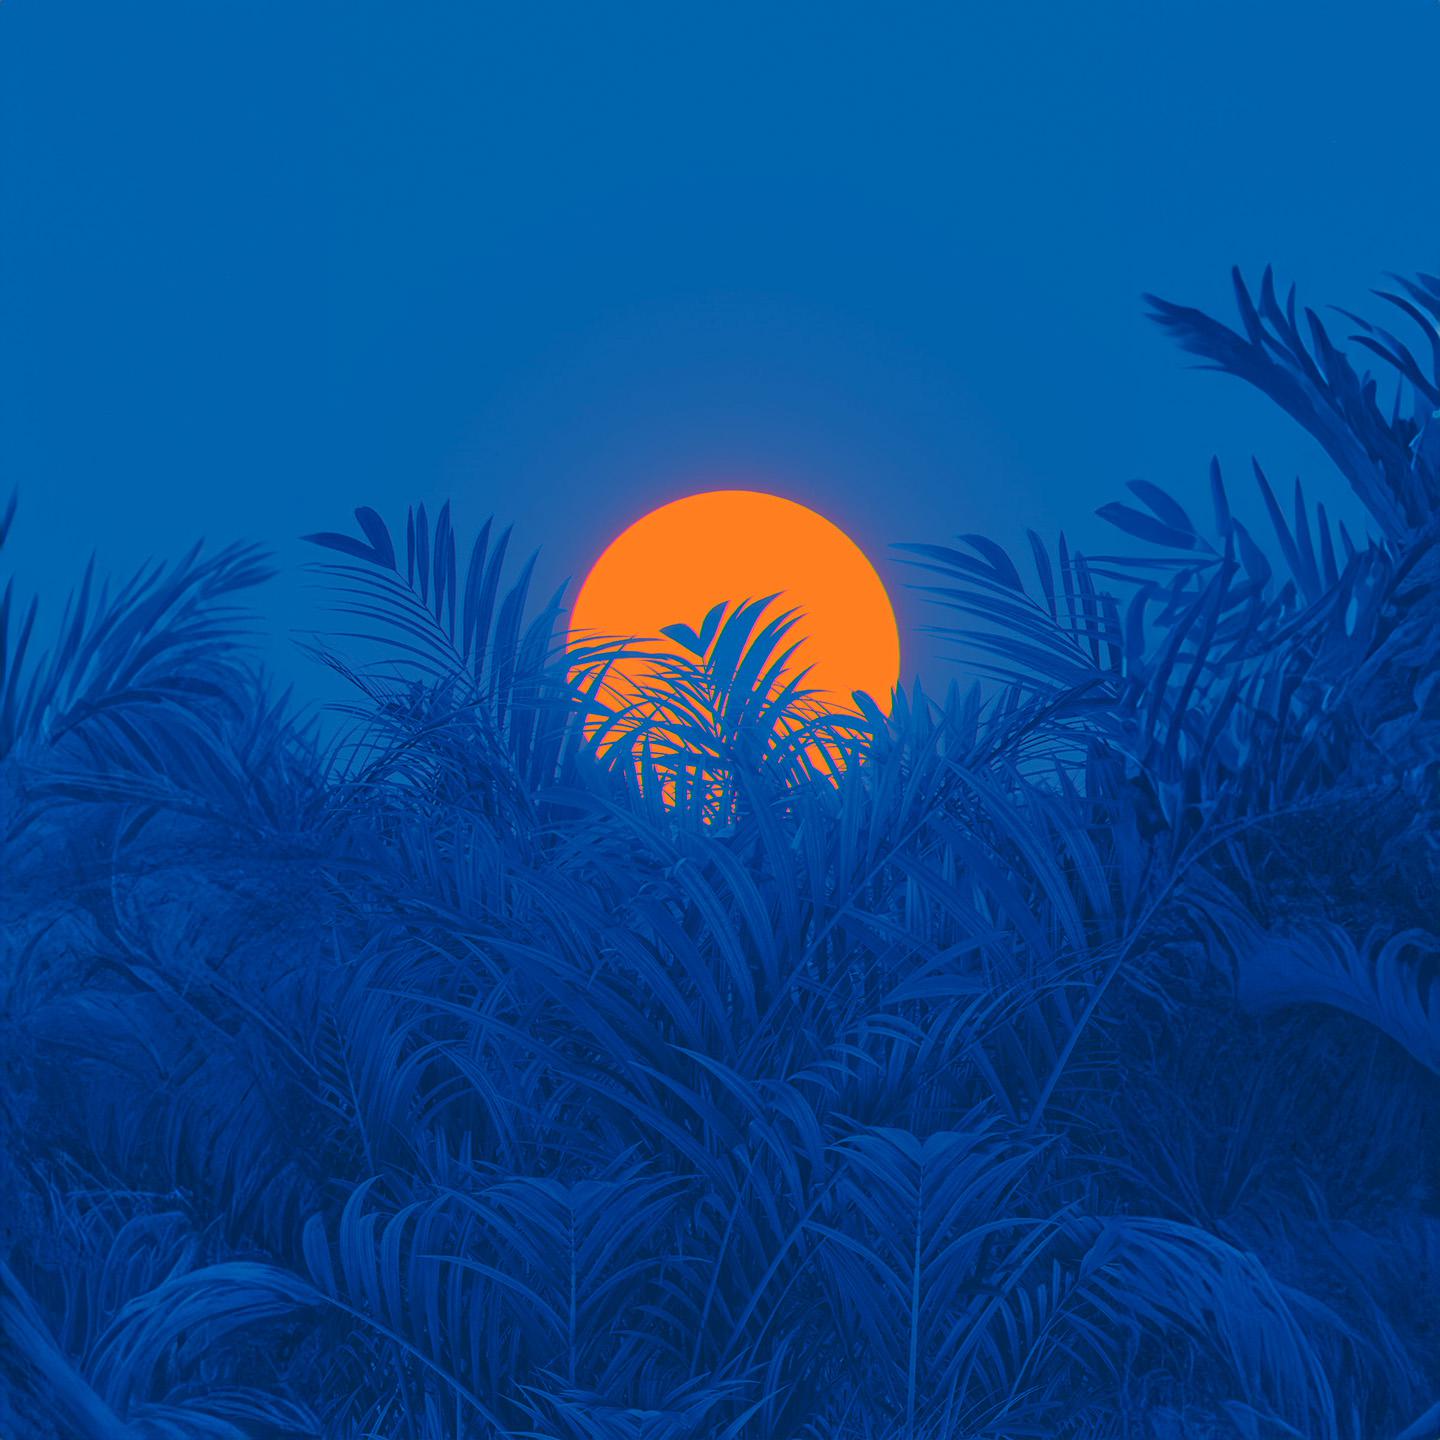 Постер альбома Blue Sunset